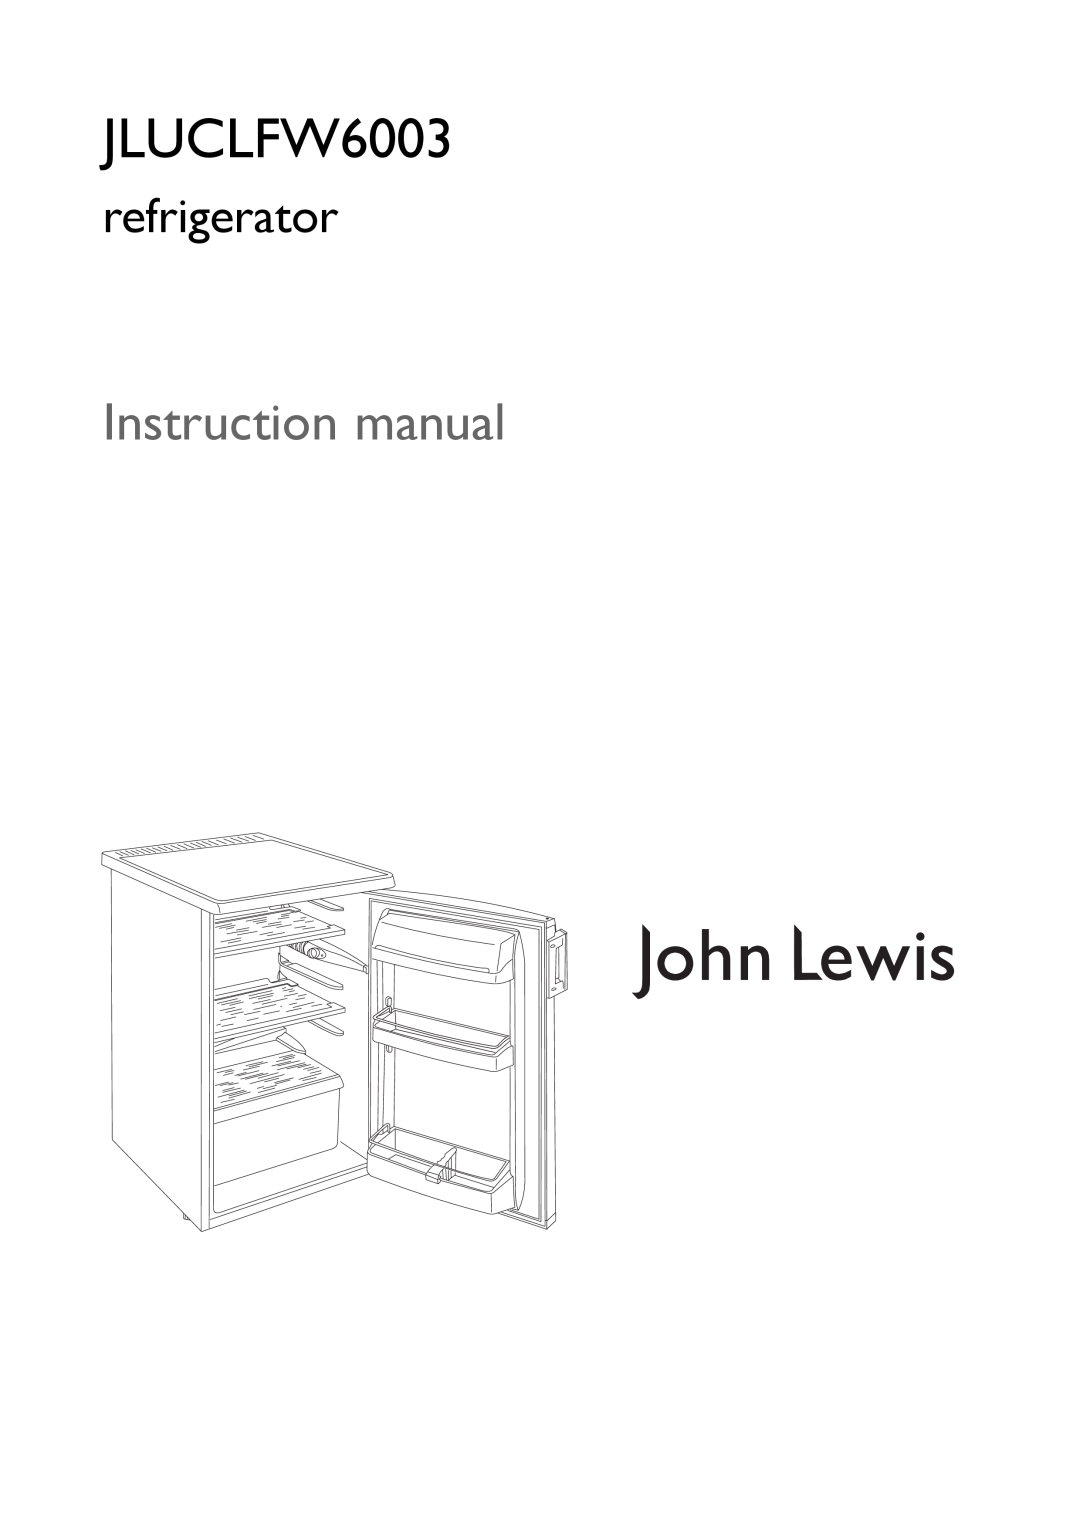 John Lewis JLUCLFW6003 instruction manual refrigerator 